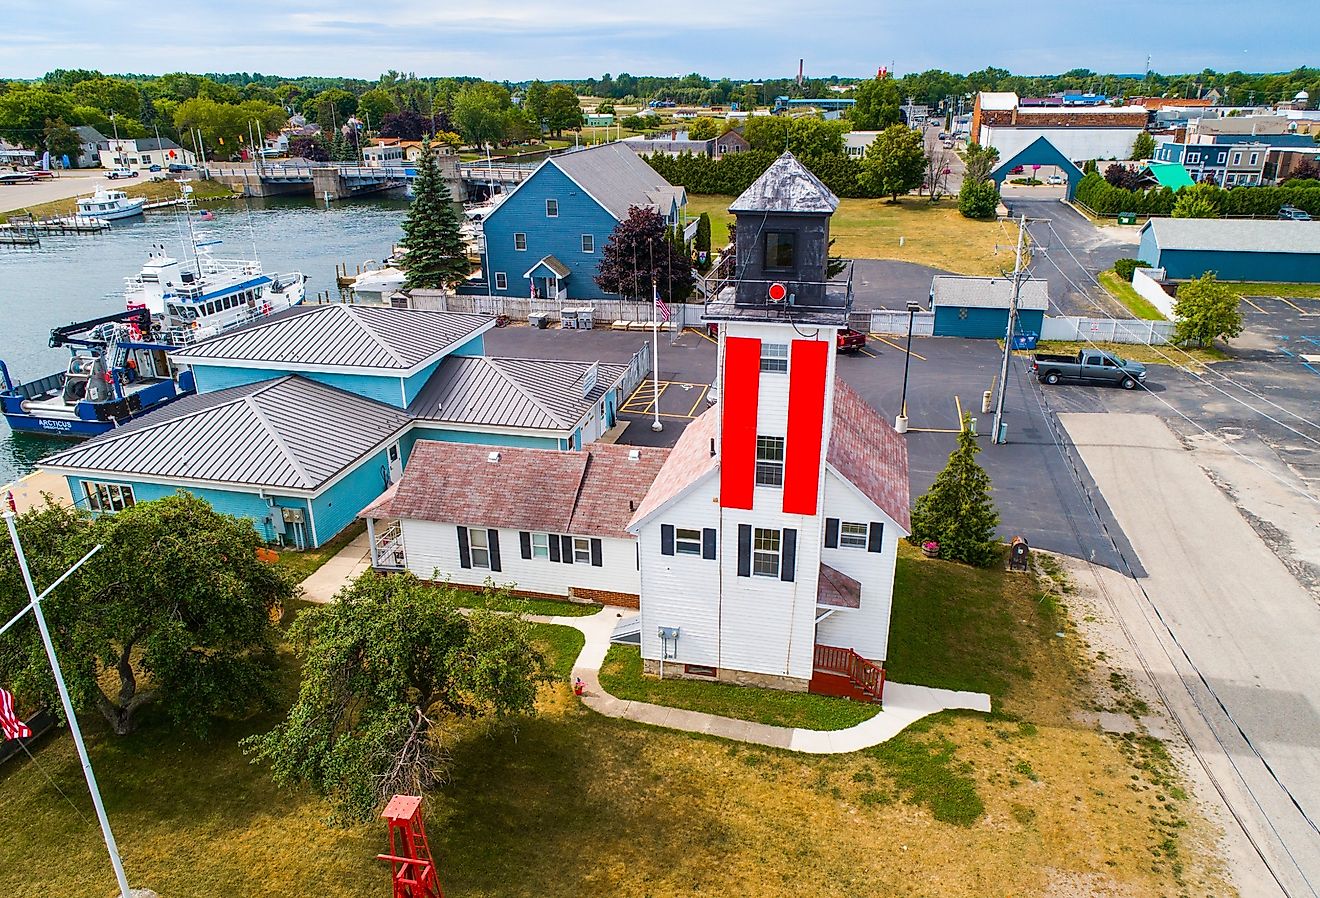 Cheboygan, Michigan Front Range Light lighthouse tower. Image credit Dennis MacDonald via Shutterstock